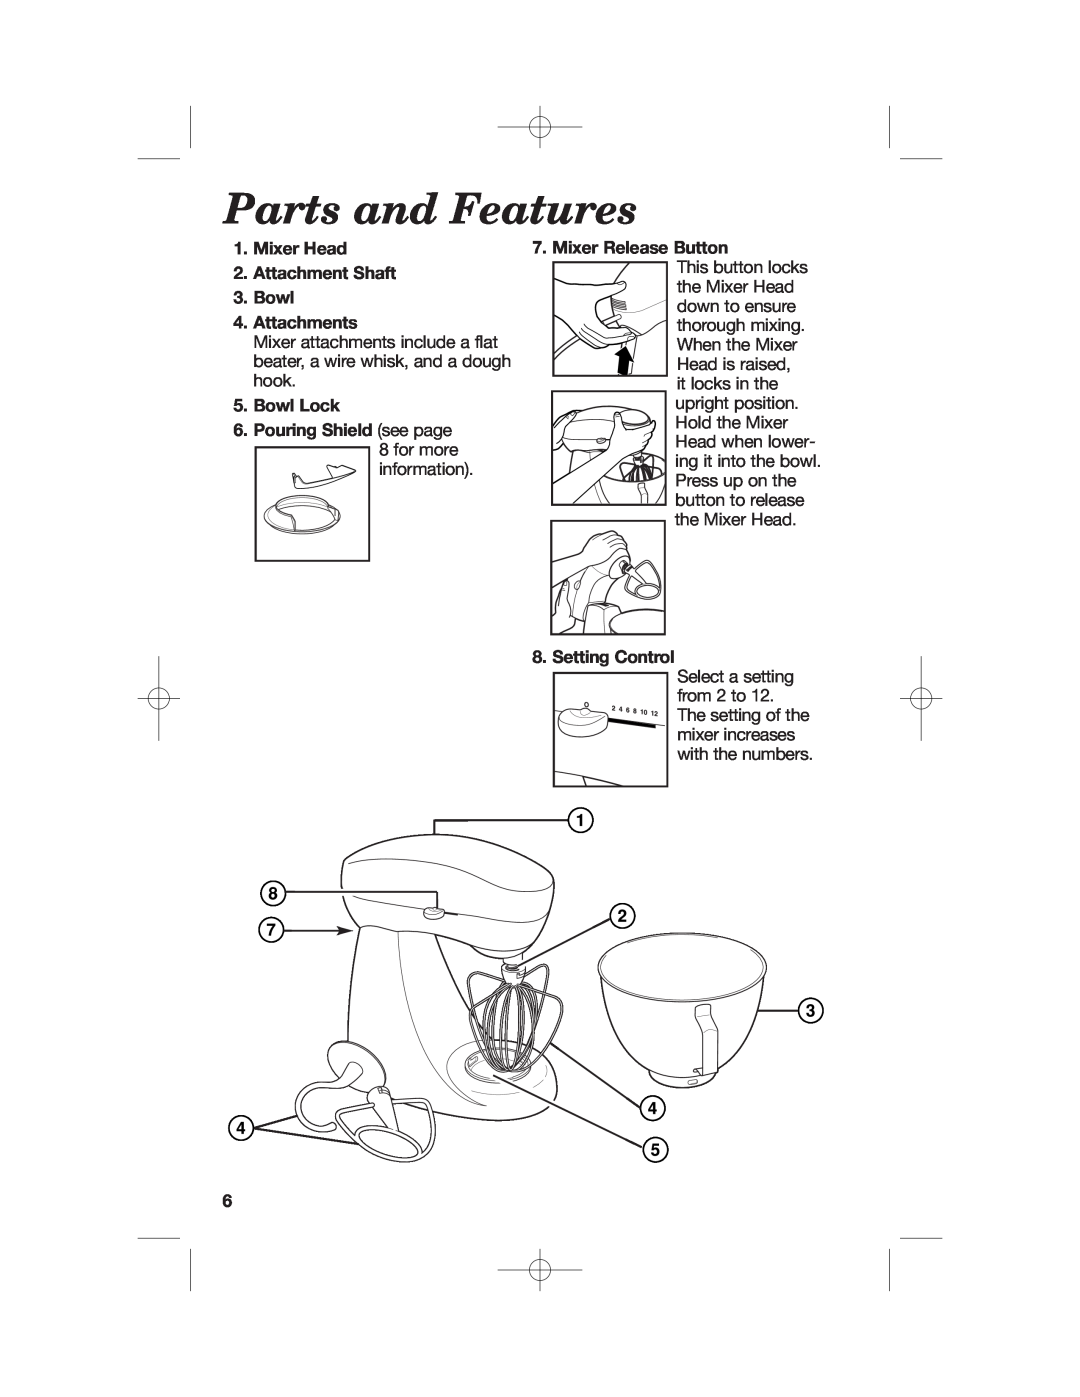 Hamilton Beach 63232 manual Parts and Features, Mixer Head 2. Attachment Shaft 3. Bowl 4. Attachments, Mixer Release Button 